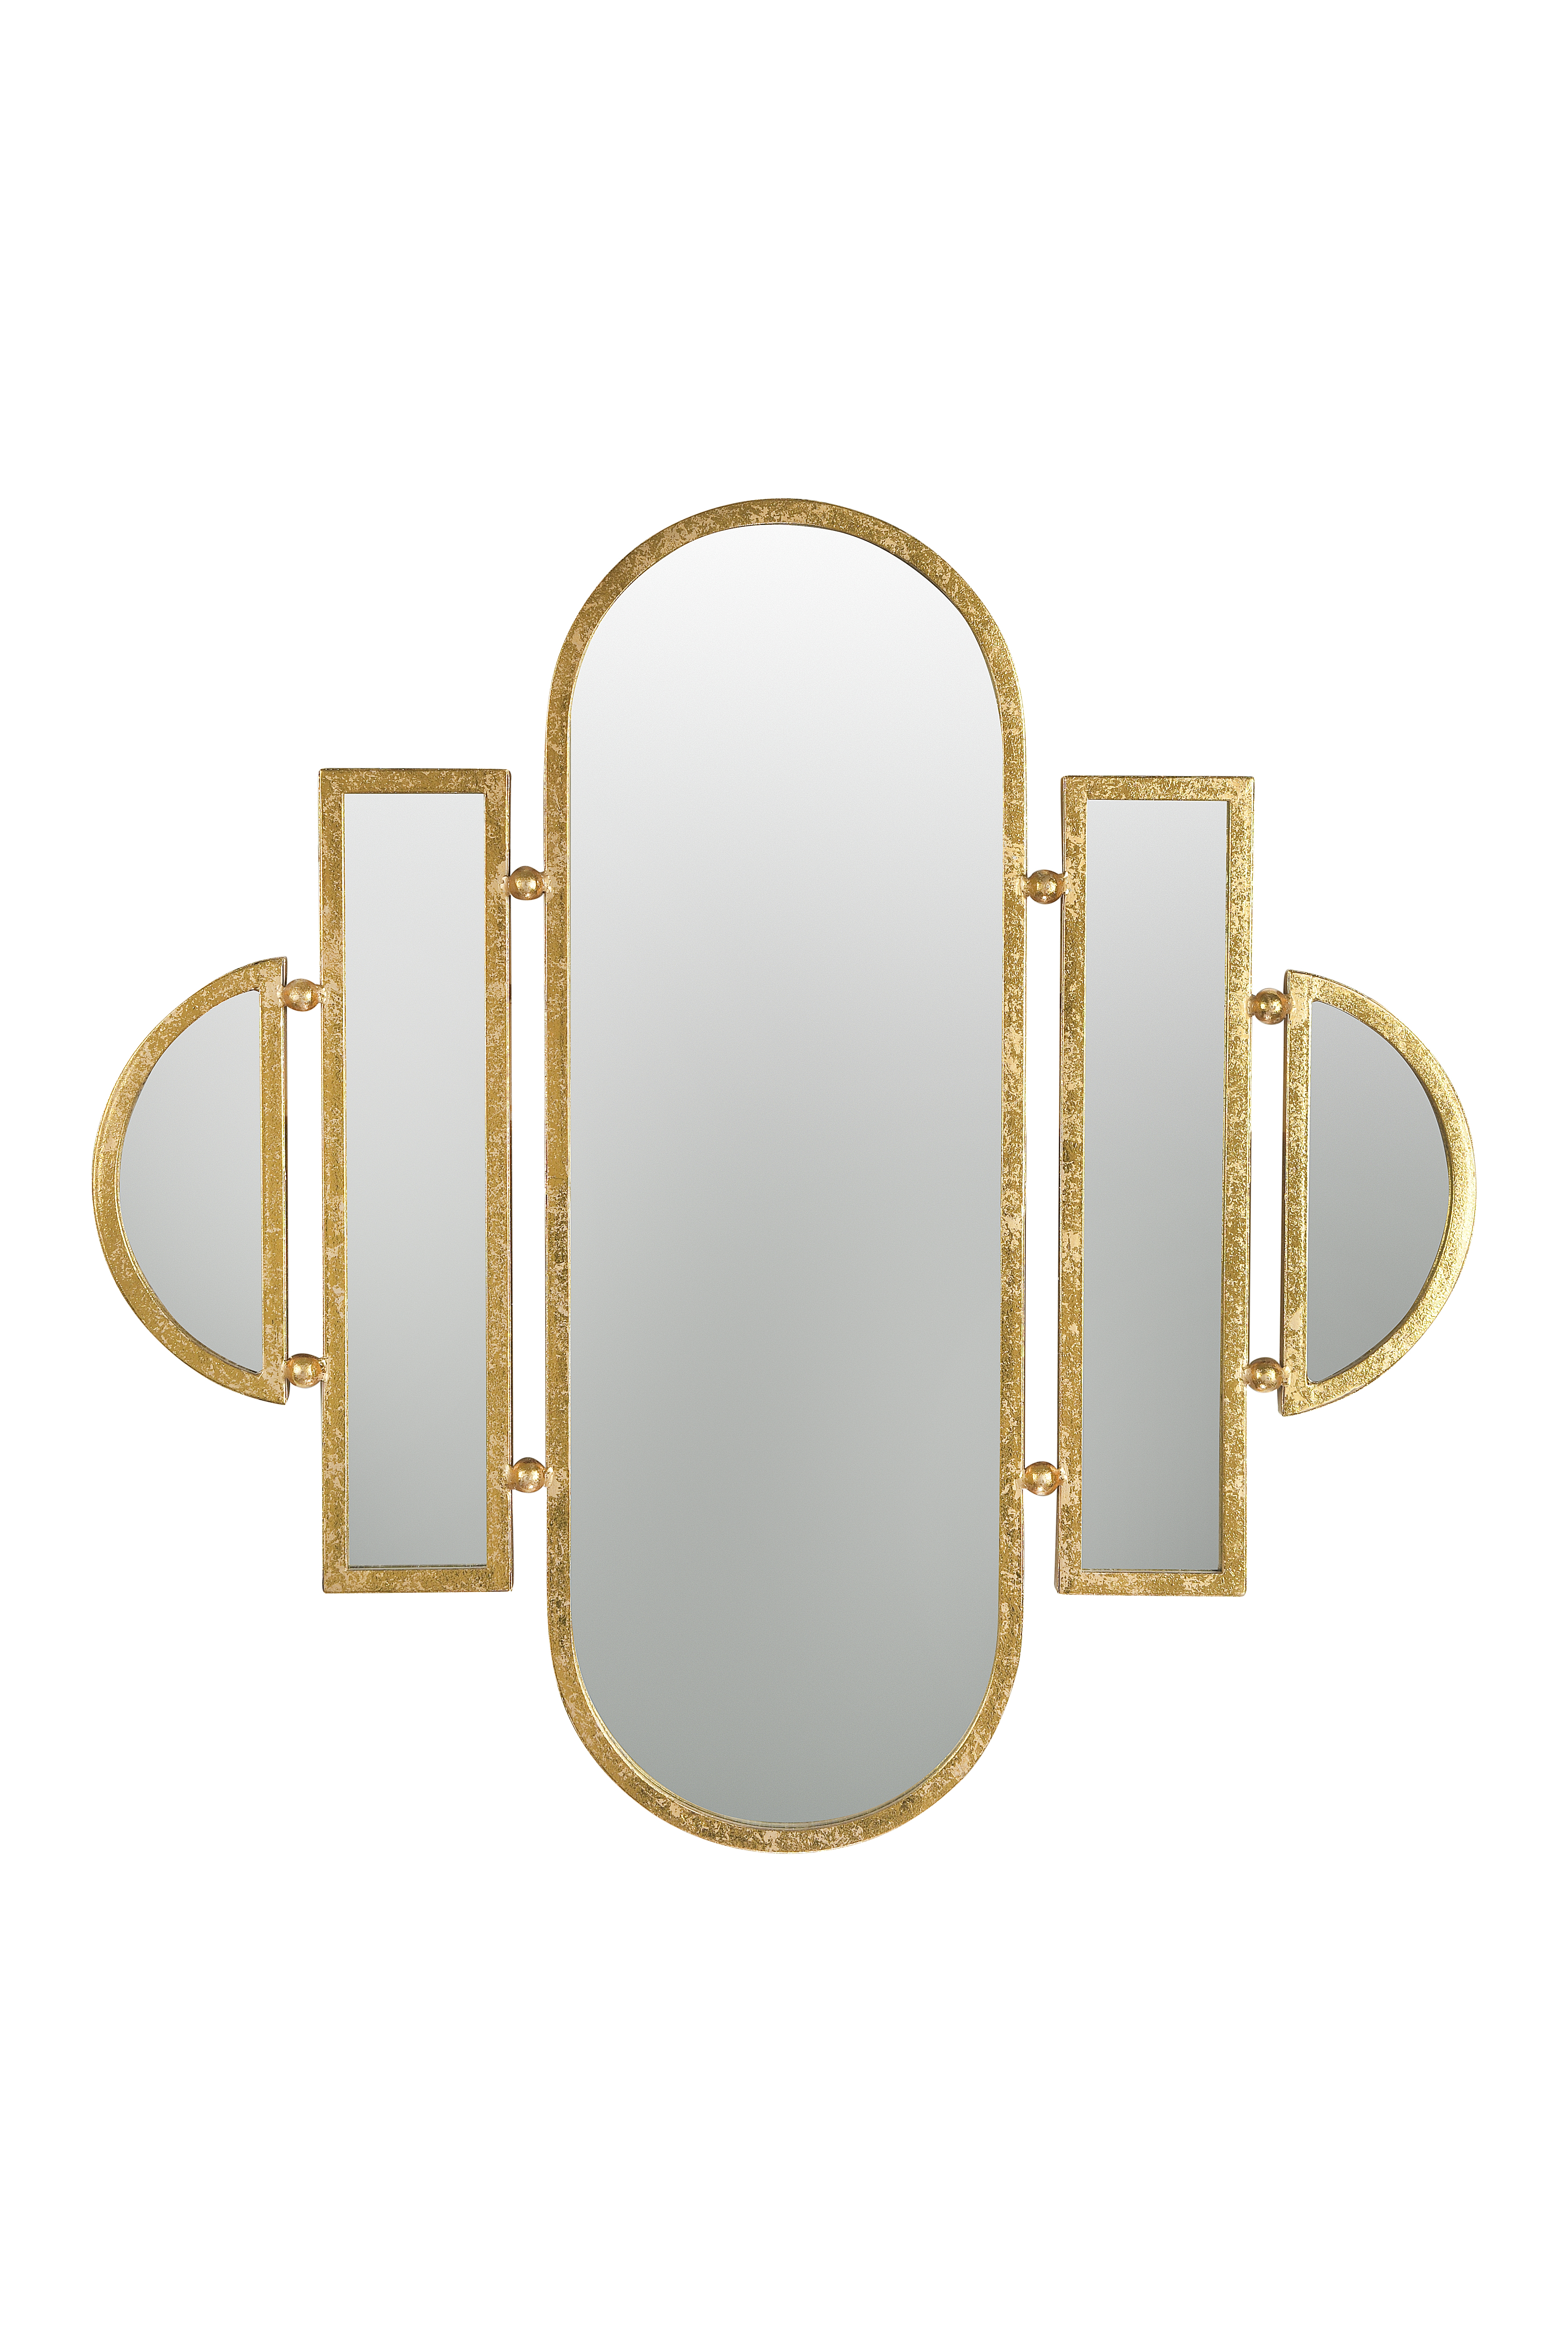 Art Deco 5-Part Wall Mirror, Gold - Image 0